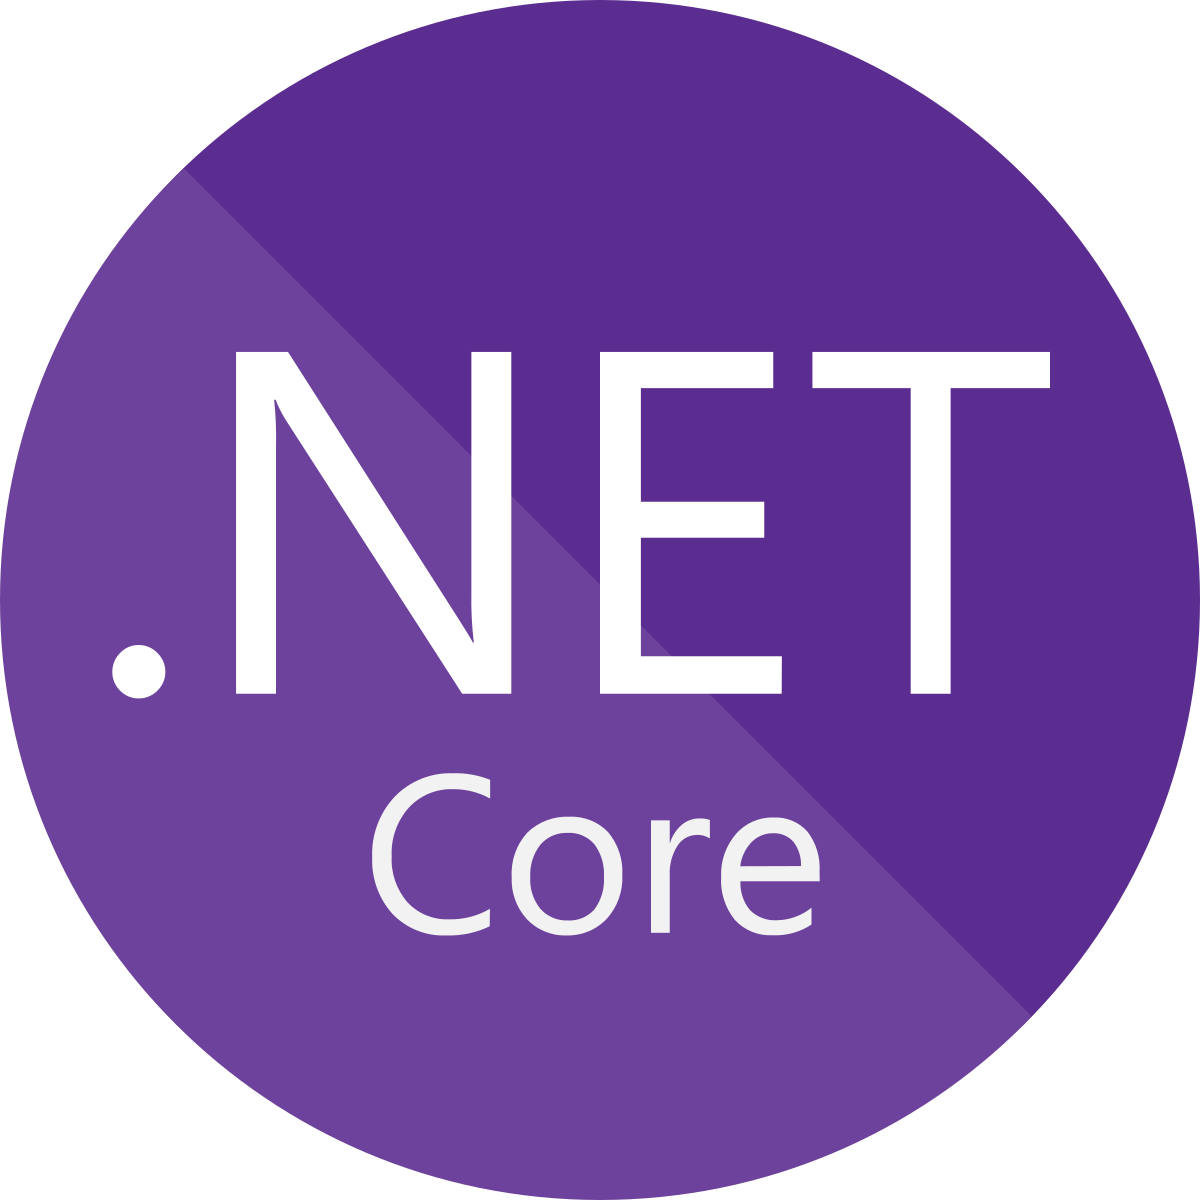 Servizi - tecnologie Net.core